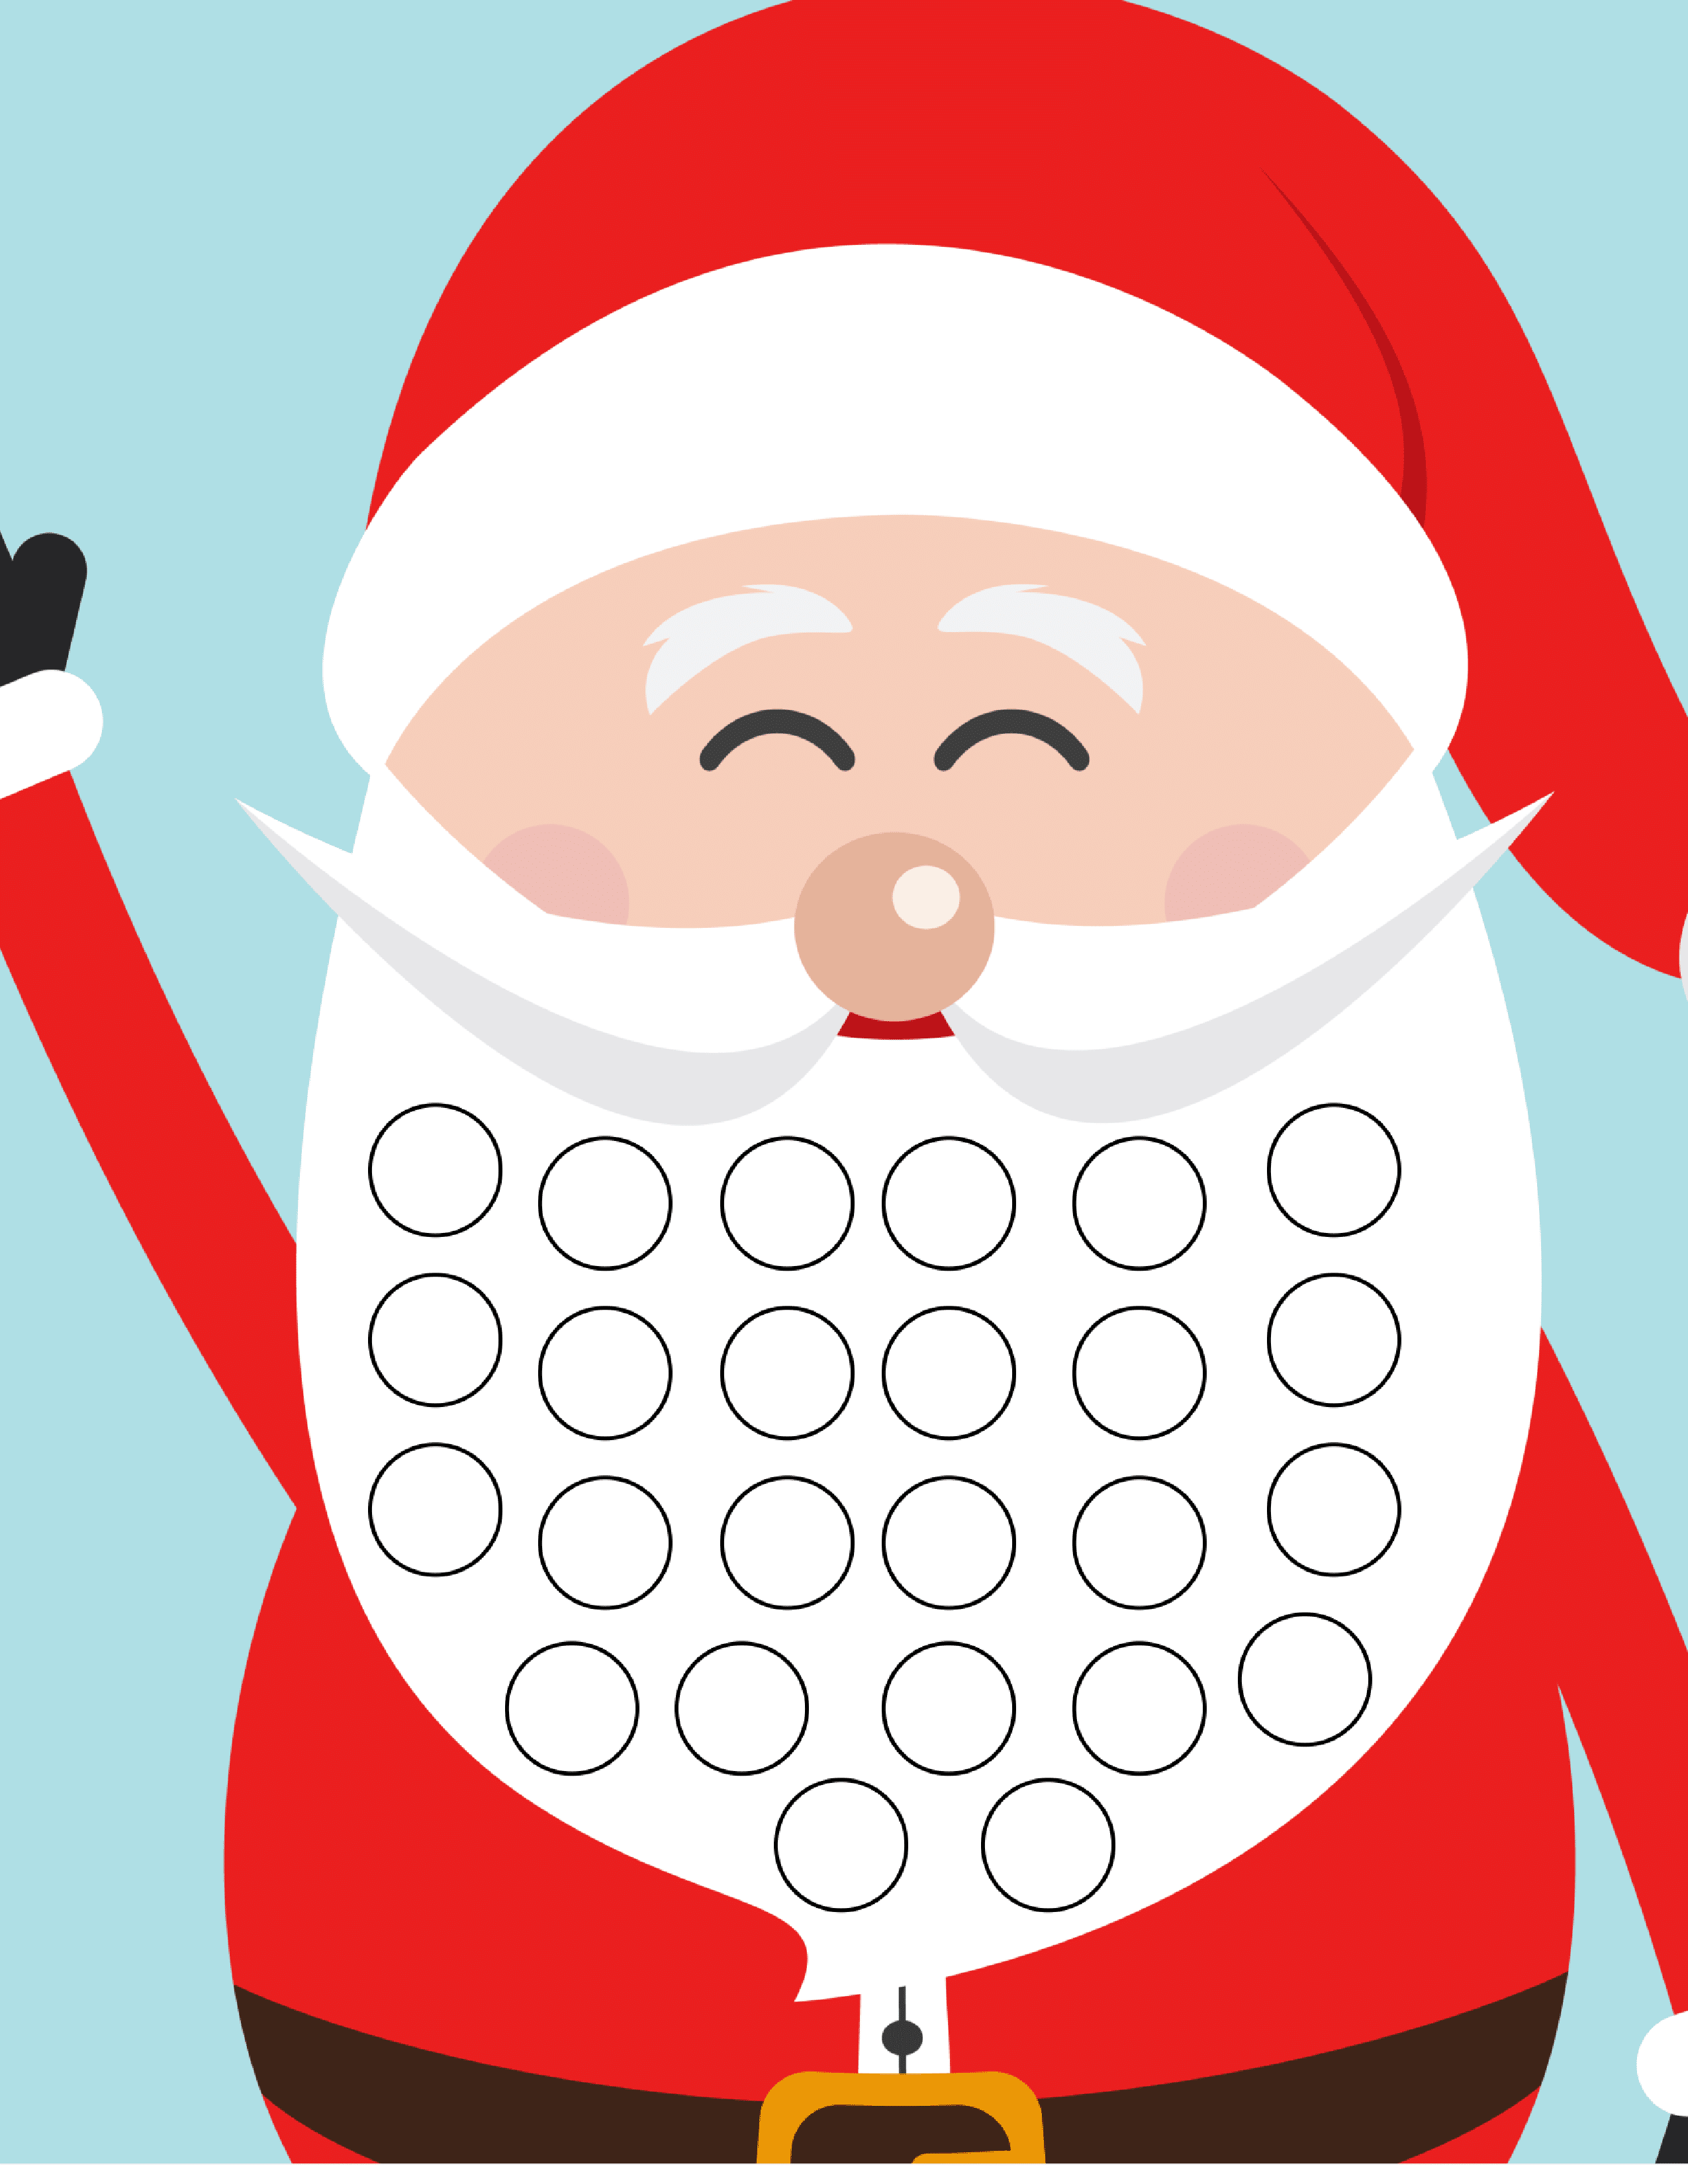 free-christmas-countdown-calendar